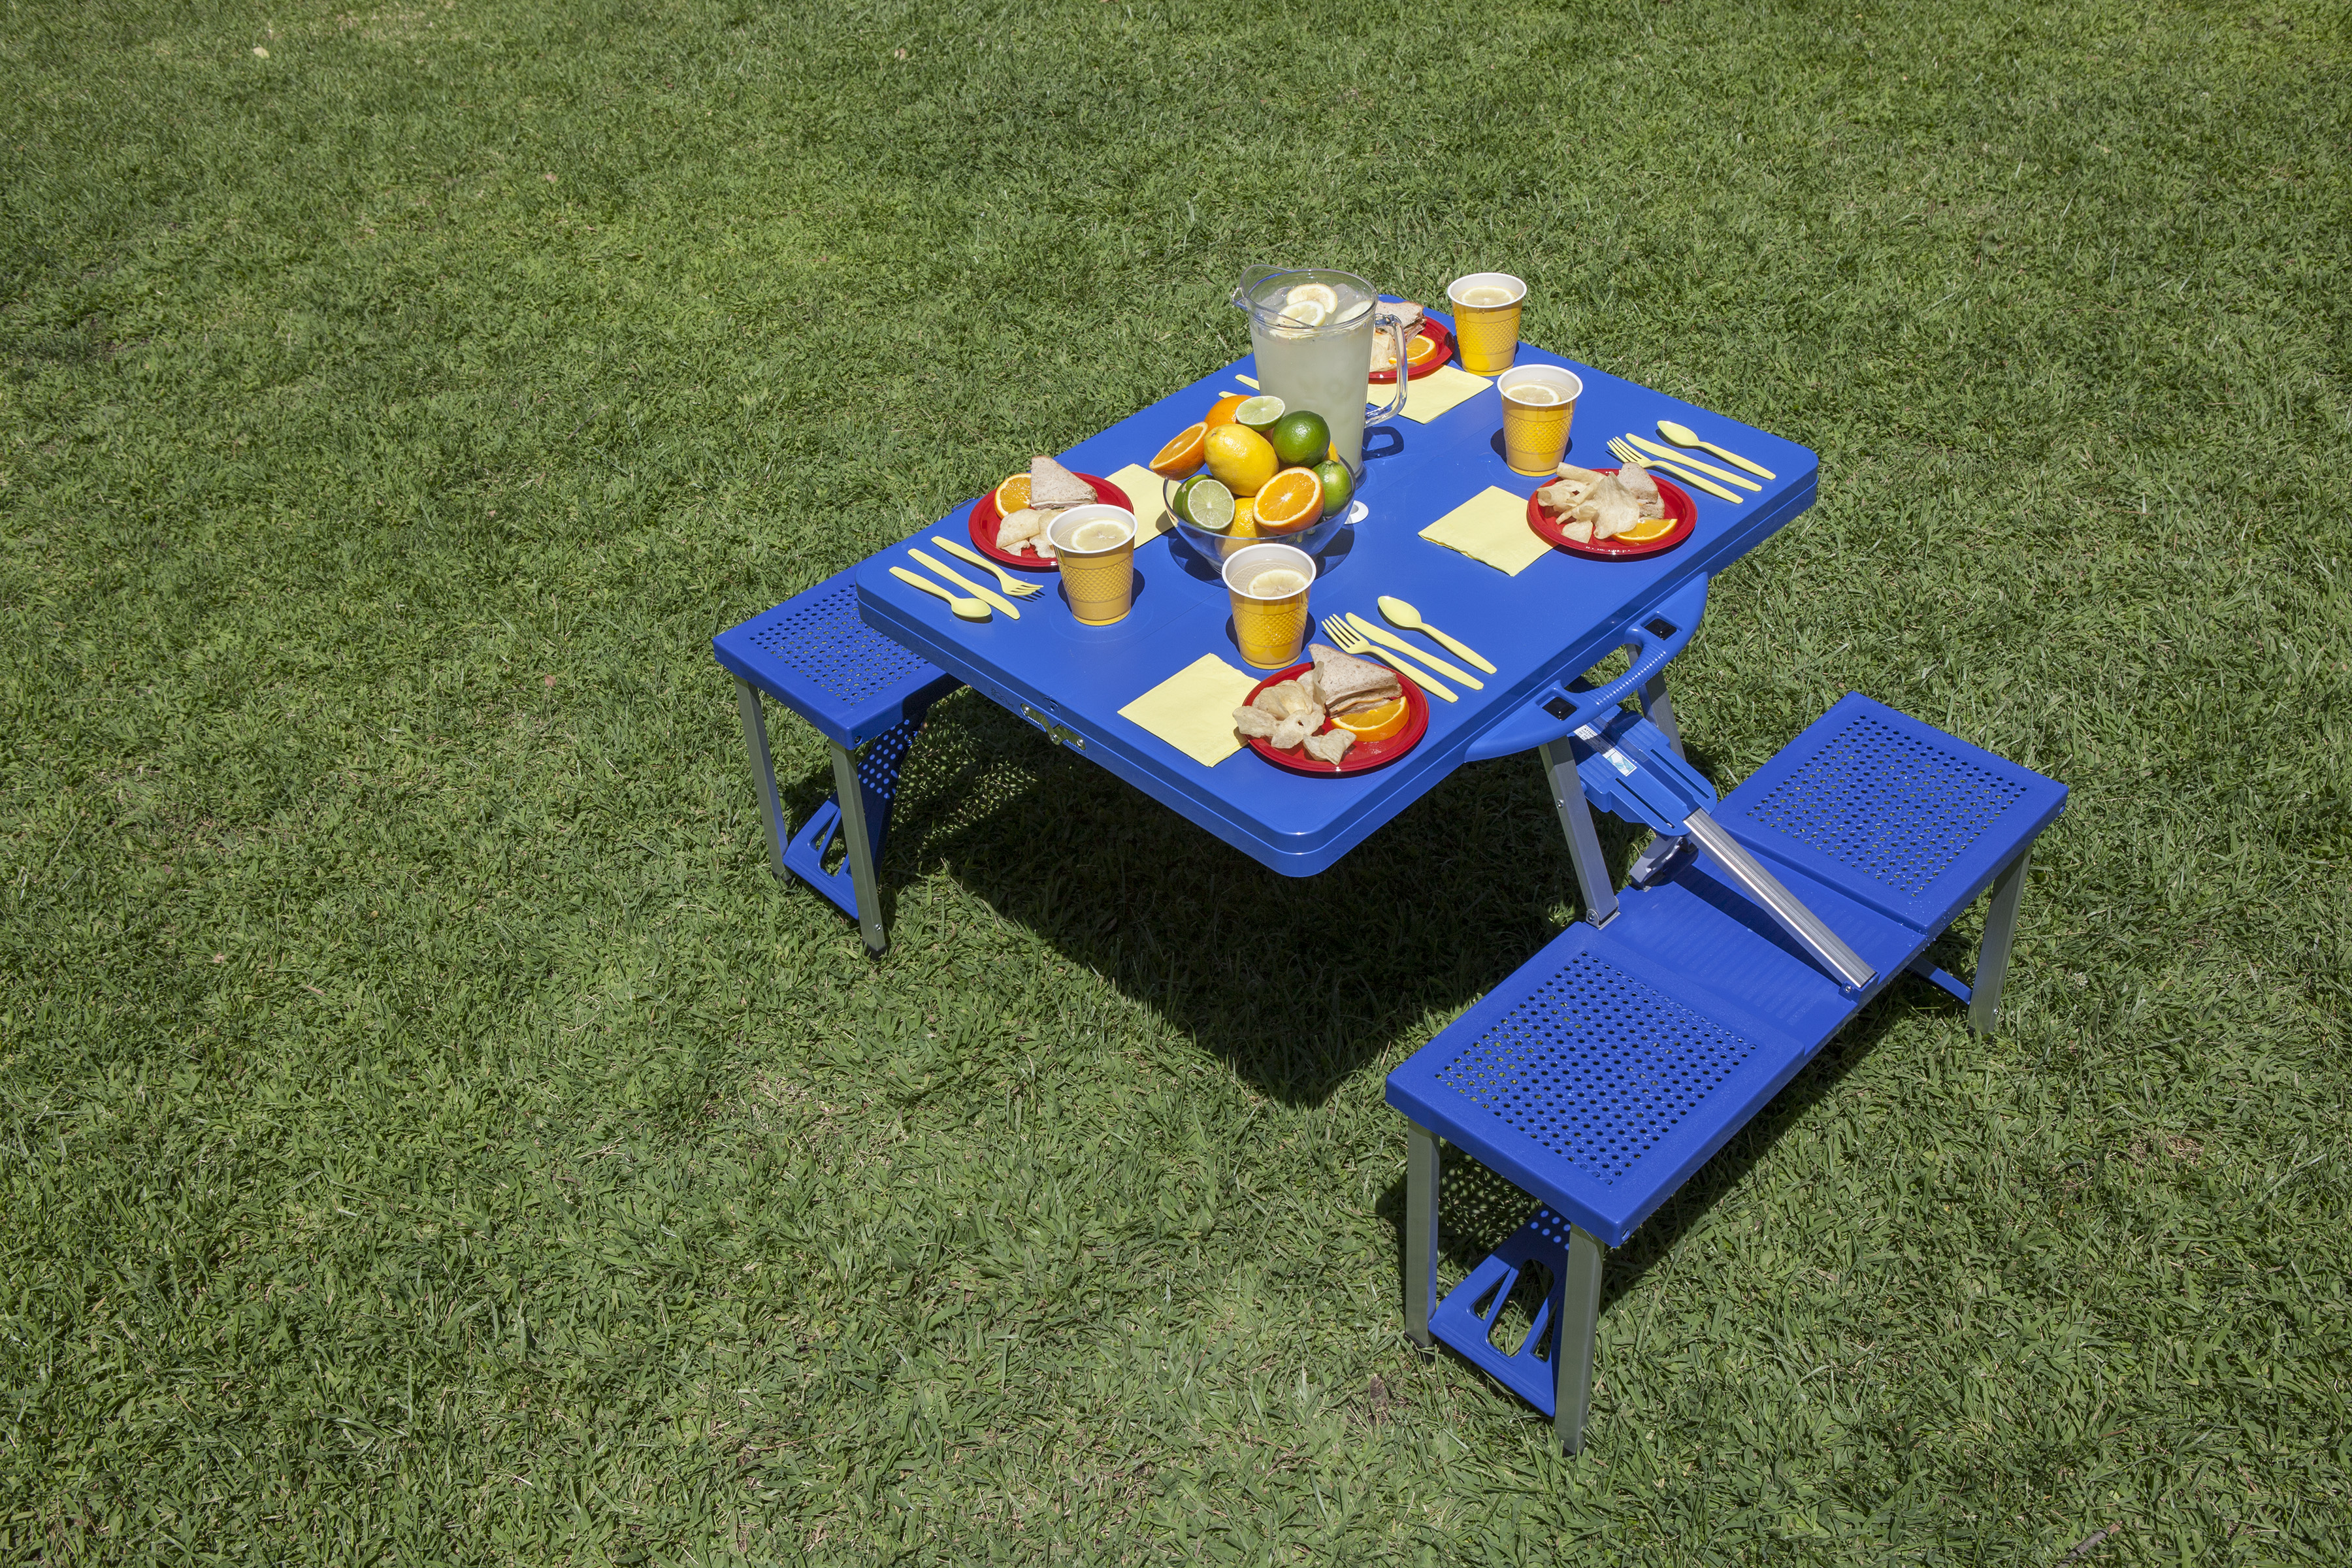 Football Field - North Carolina Tar Heels - Picnic Table Portable Folding Table with Seats